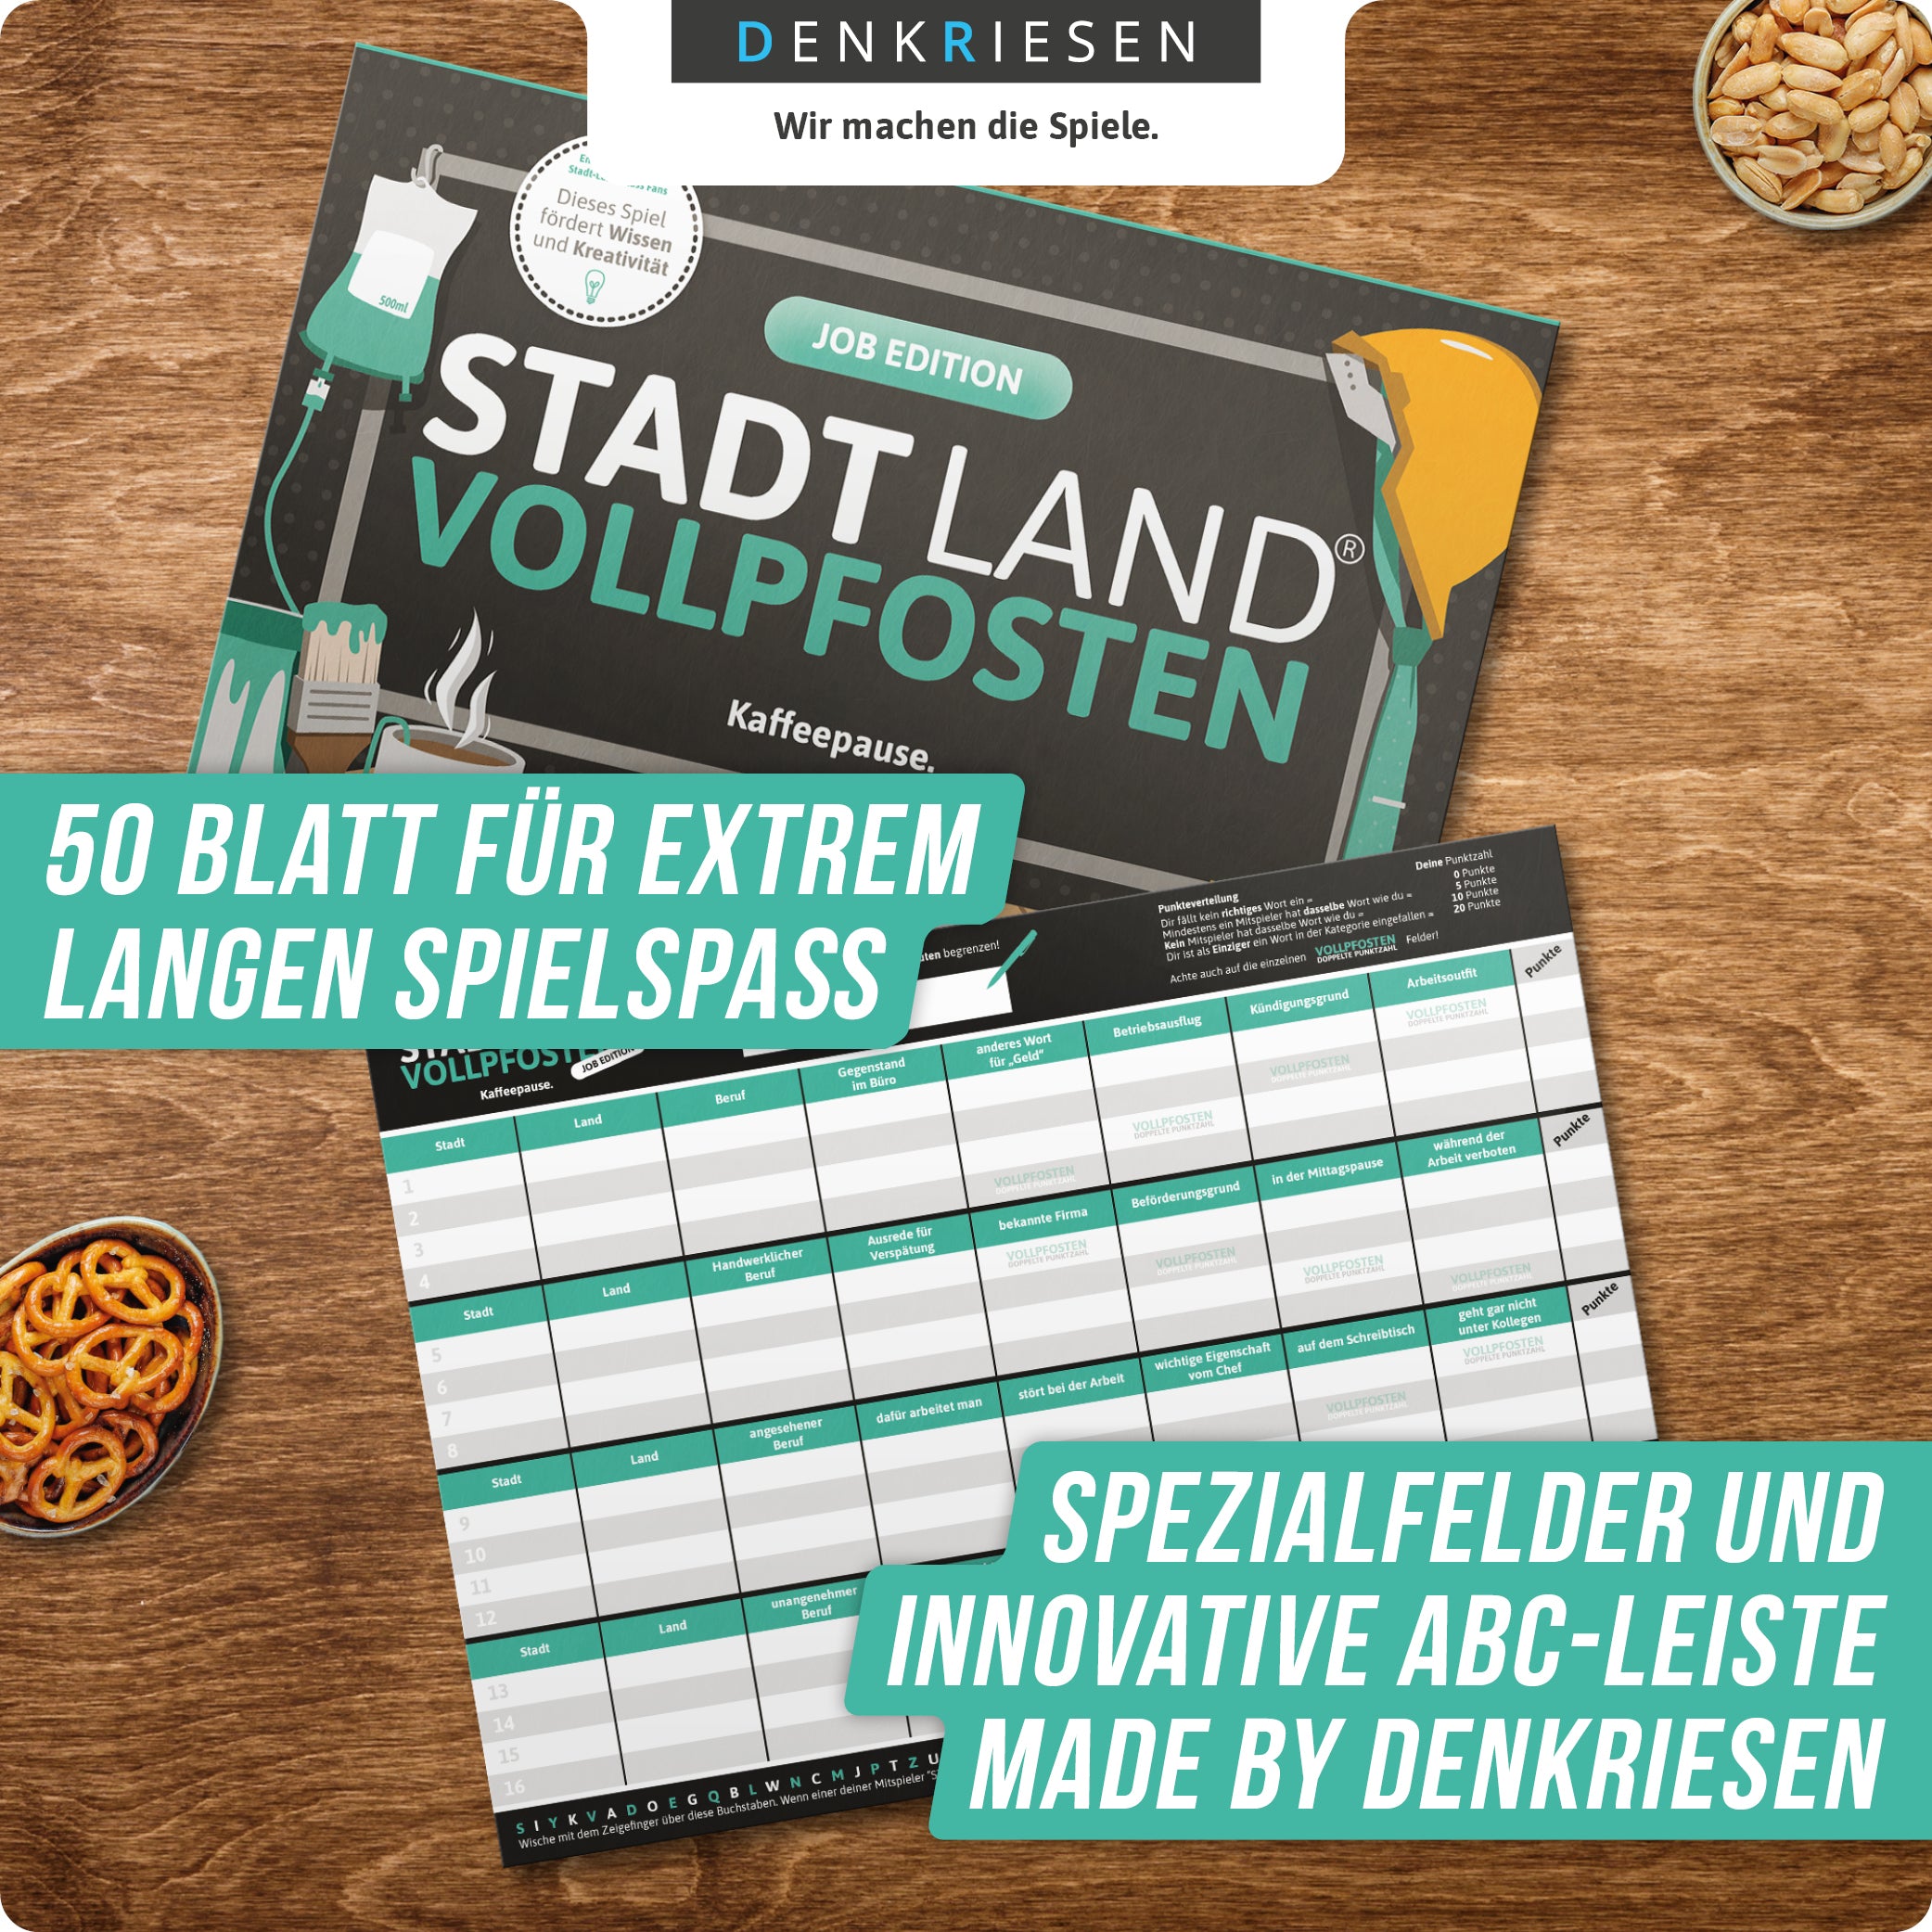 Stadt Land Vollpfosten - Job Edition | DinA4 Format